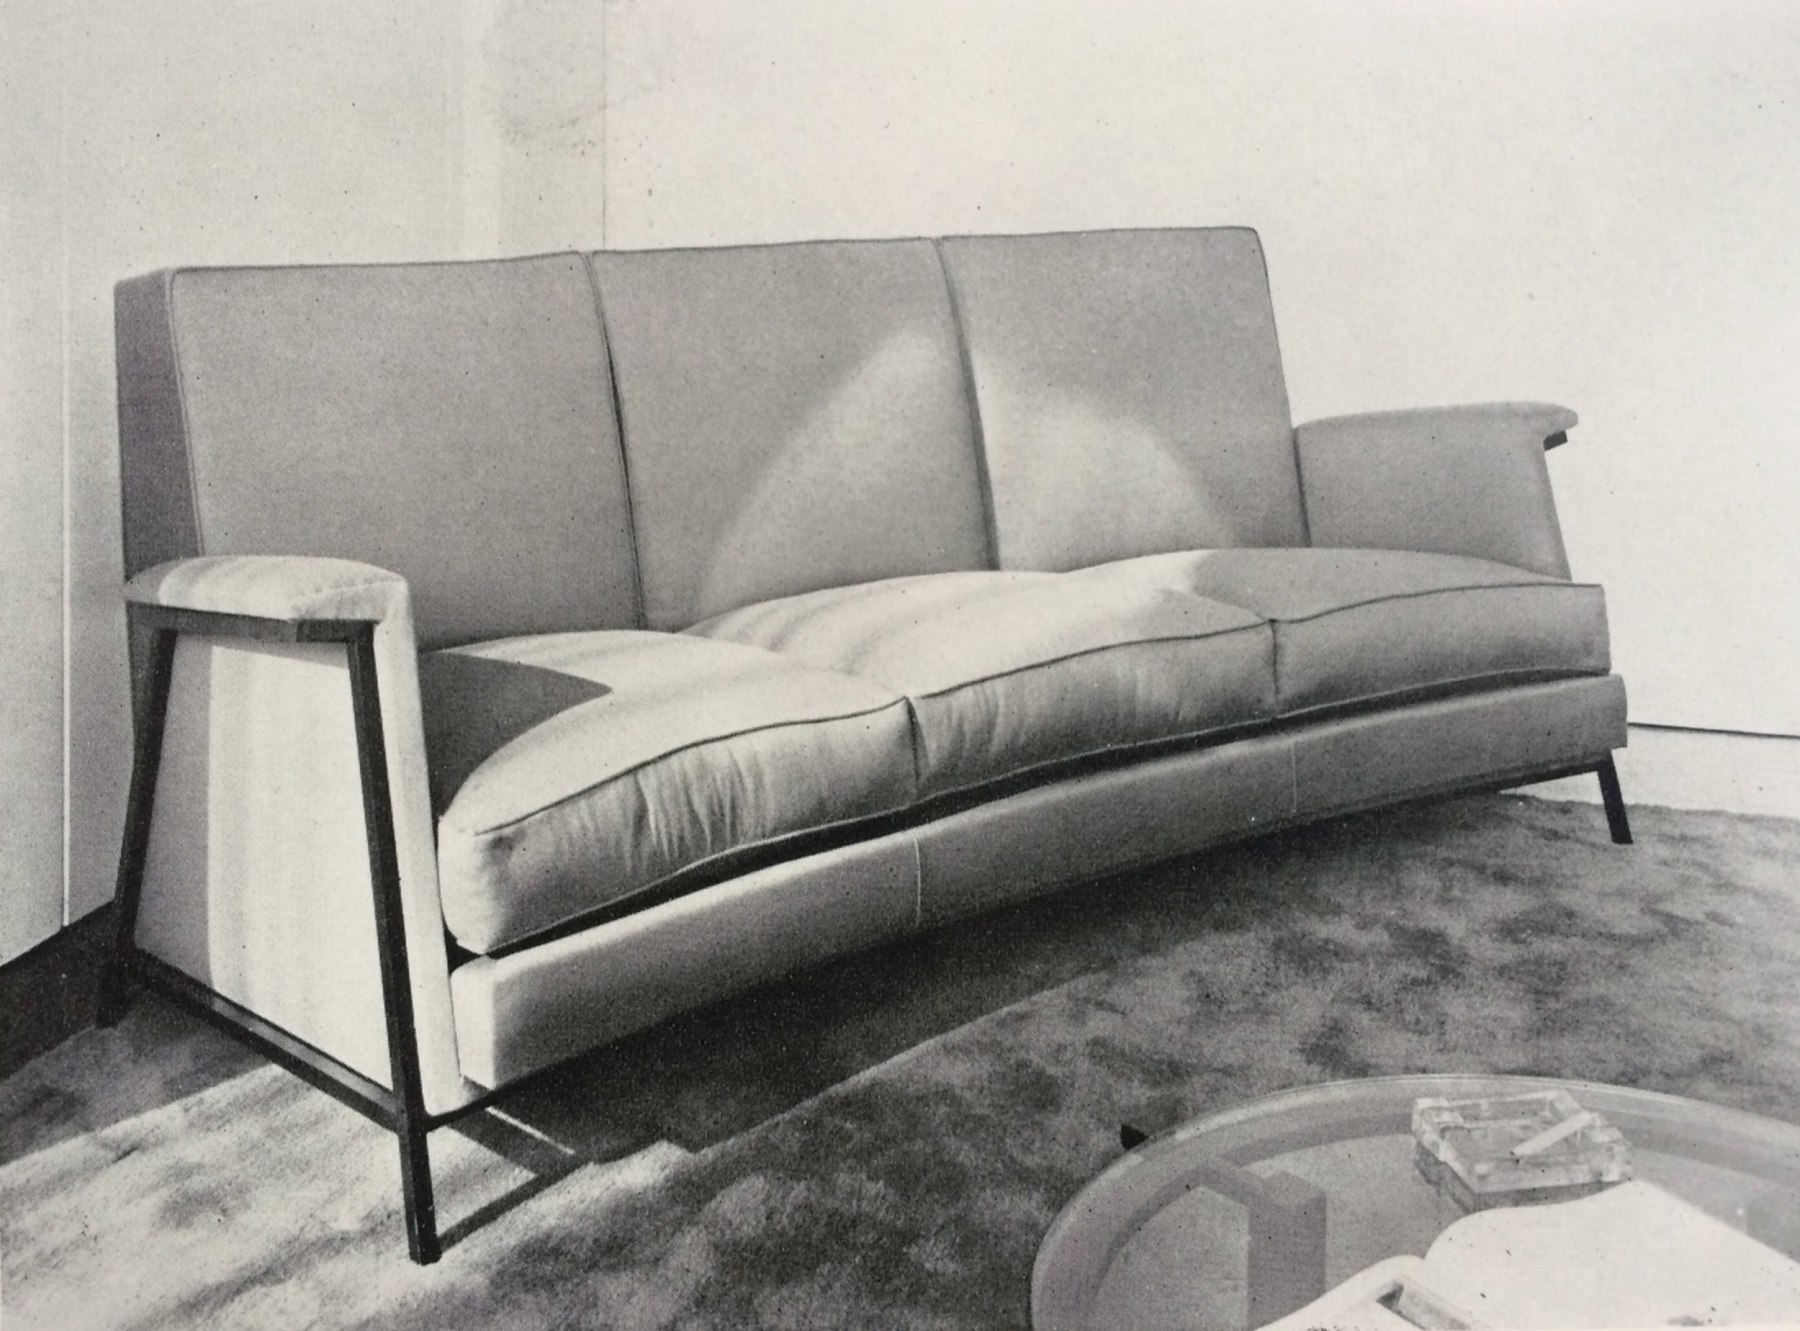 Similar sofa with apparent metal structure, c. 1956